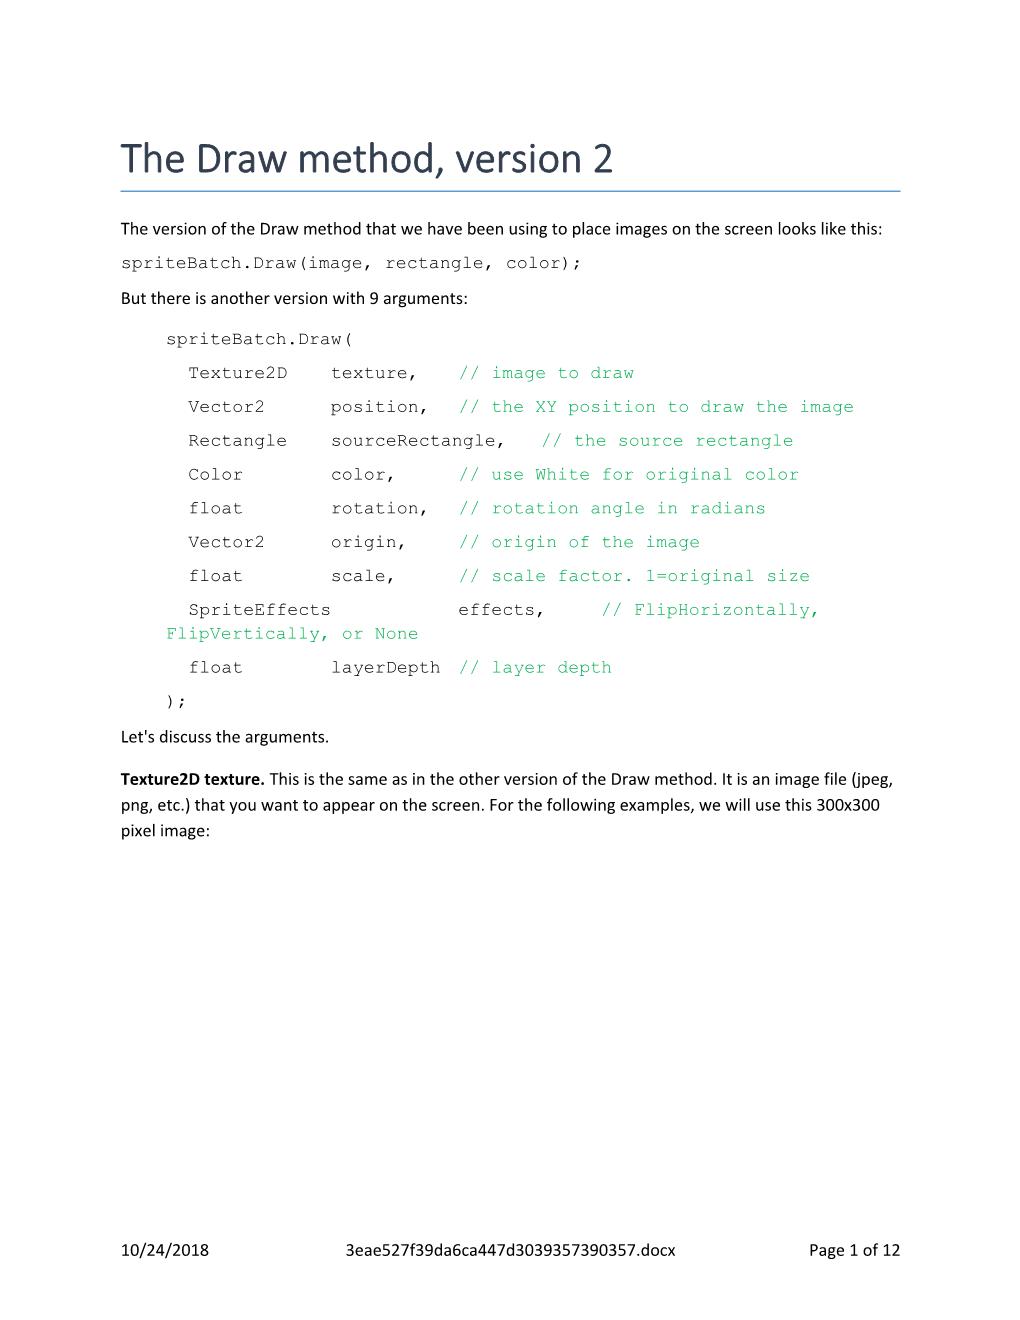 The Draw Method, Version 2